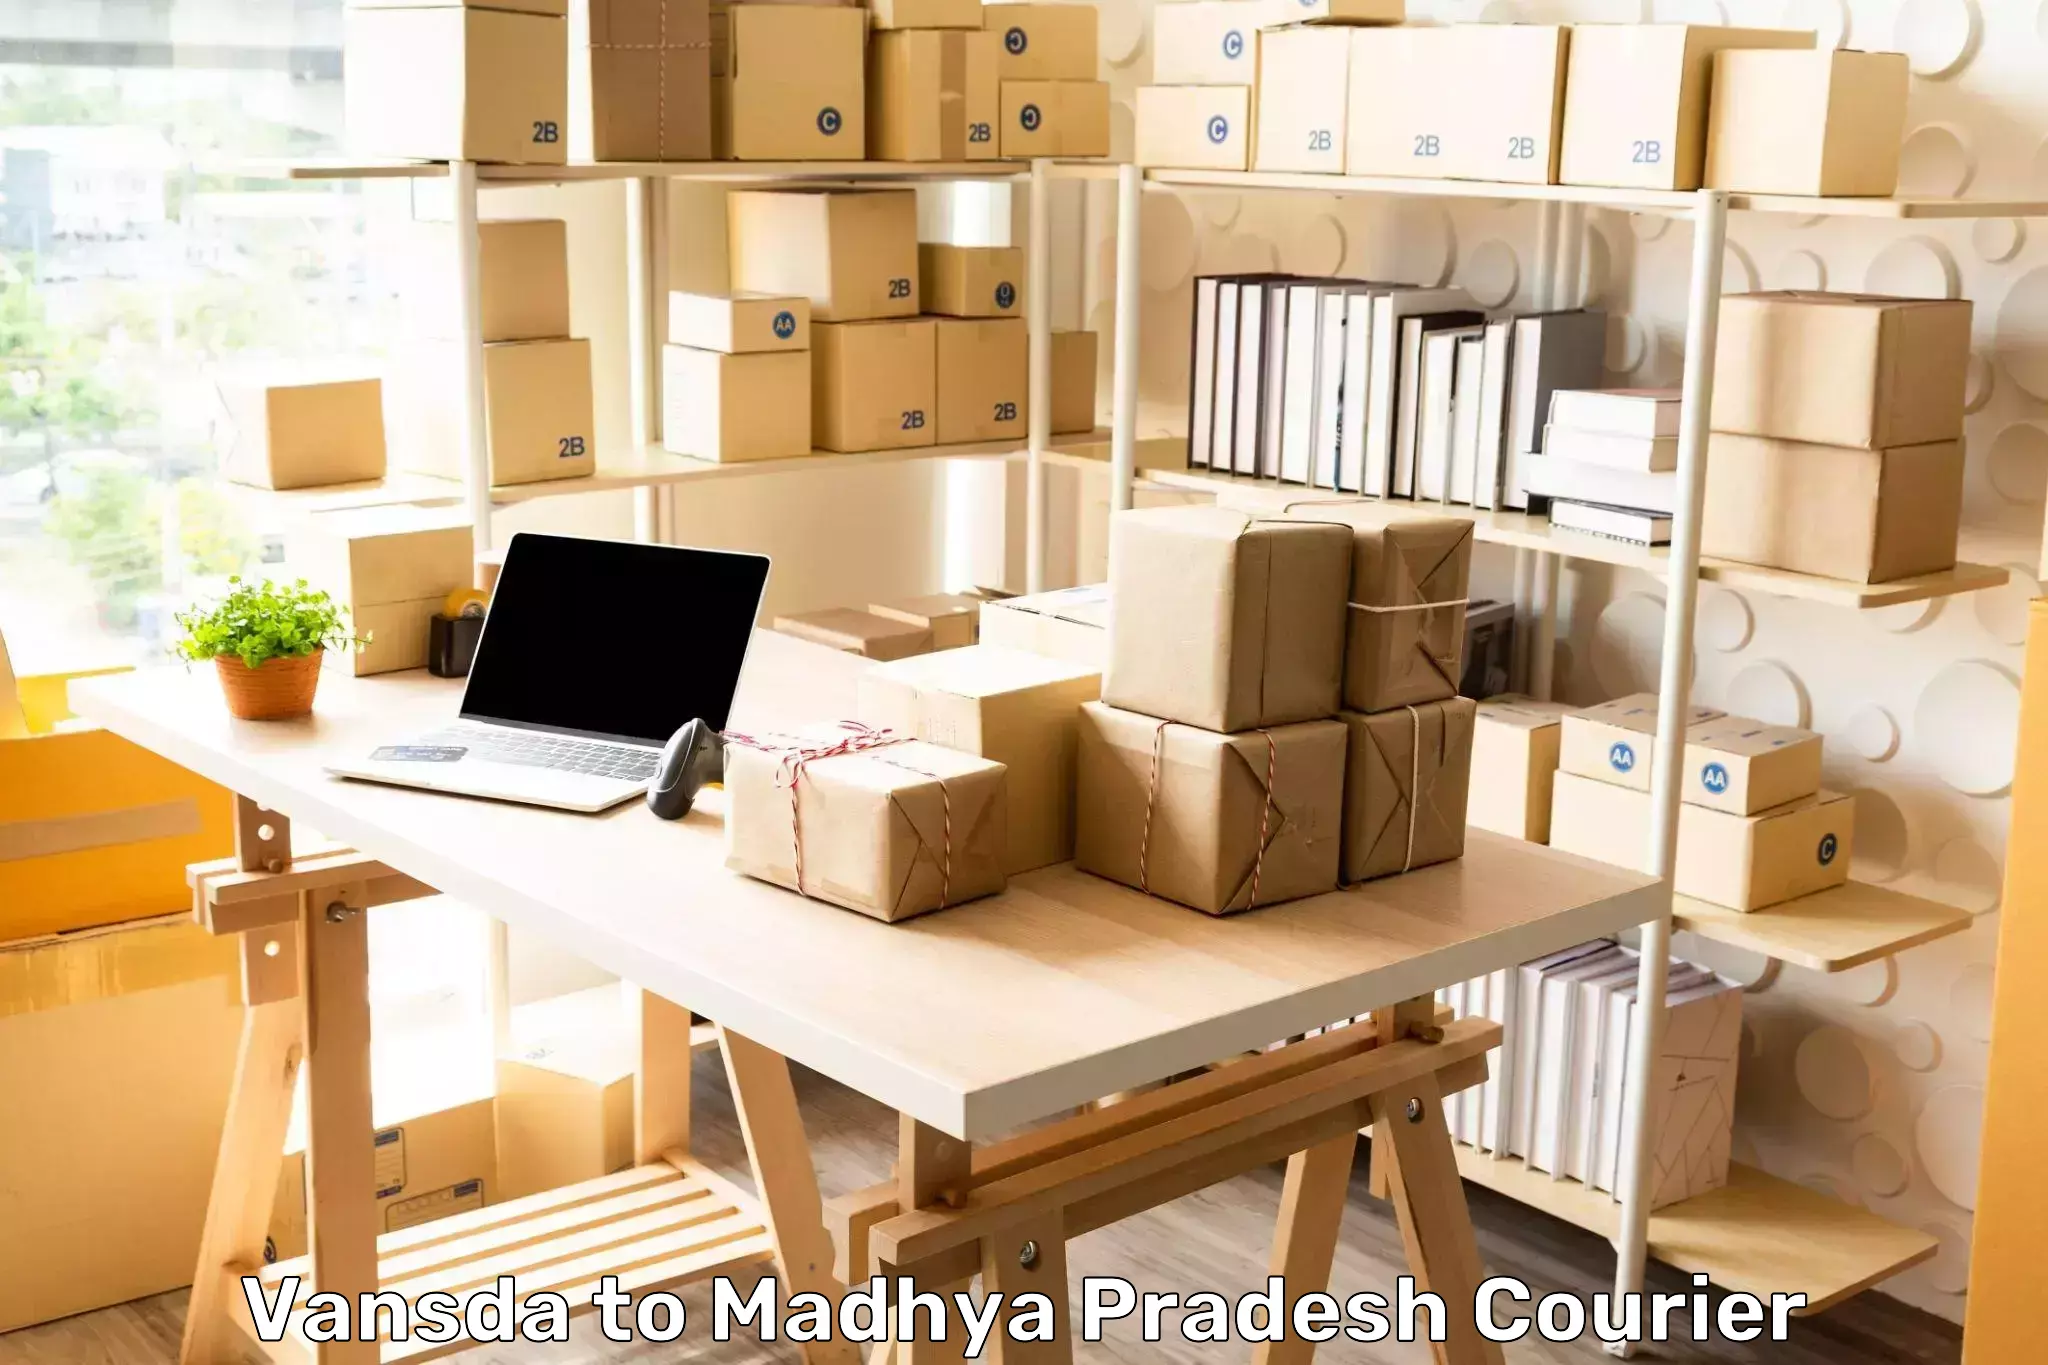 Efficient order fulfillment in Vansda to Madhya Pradesh